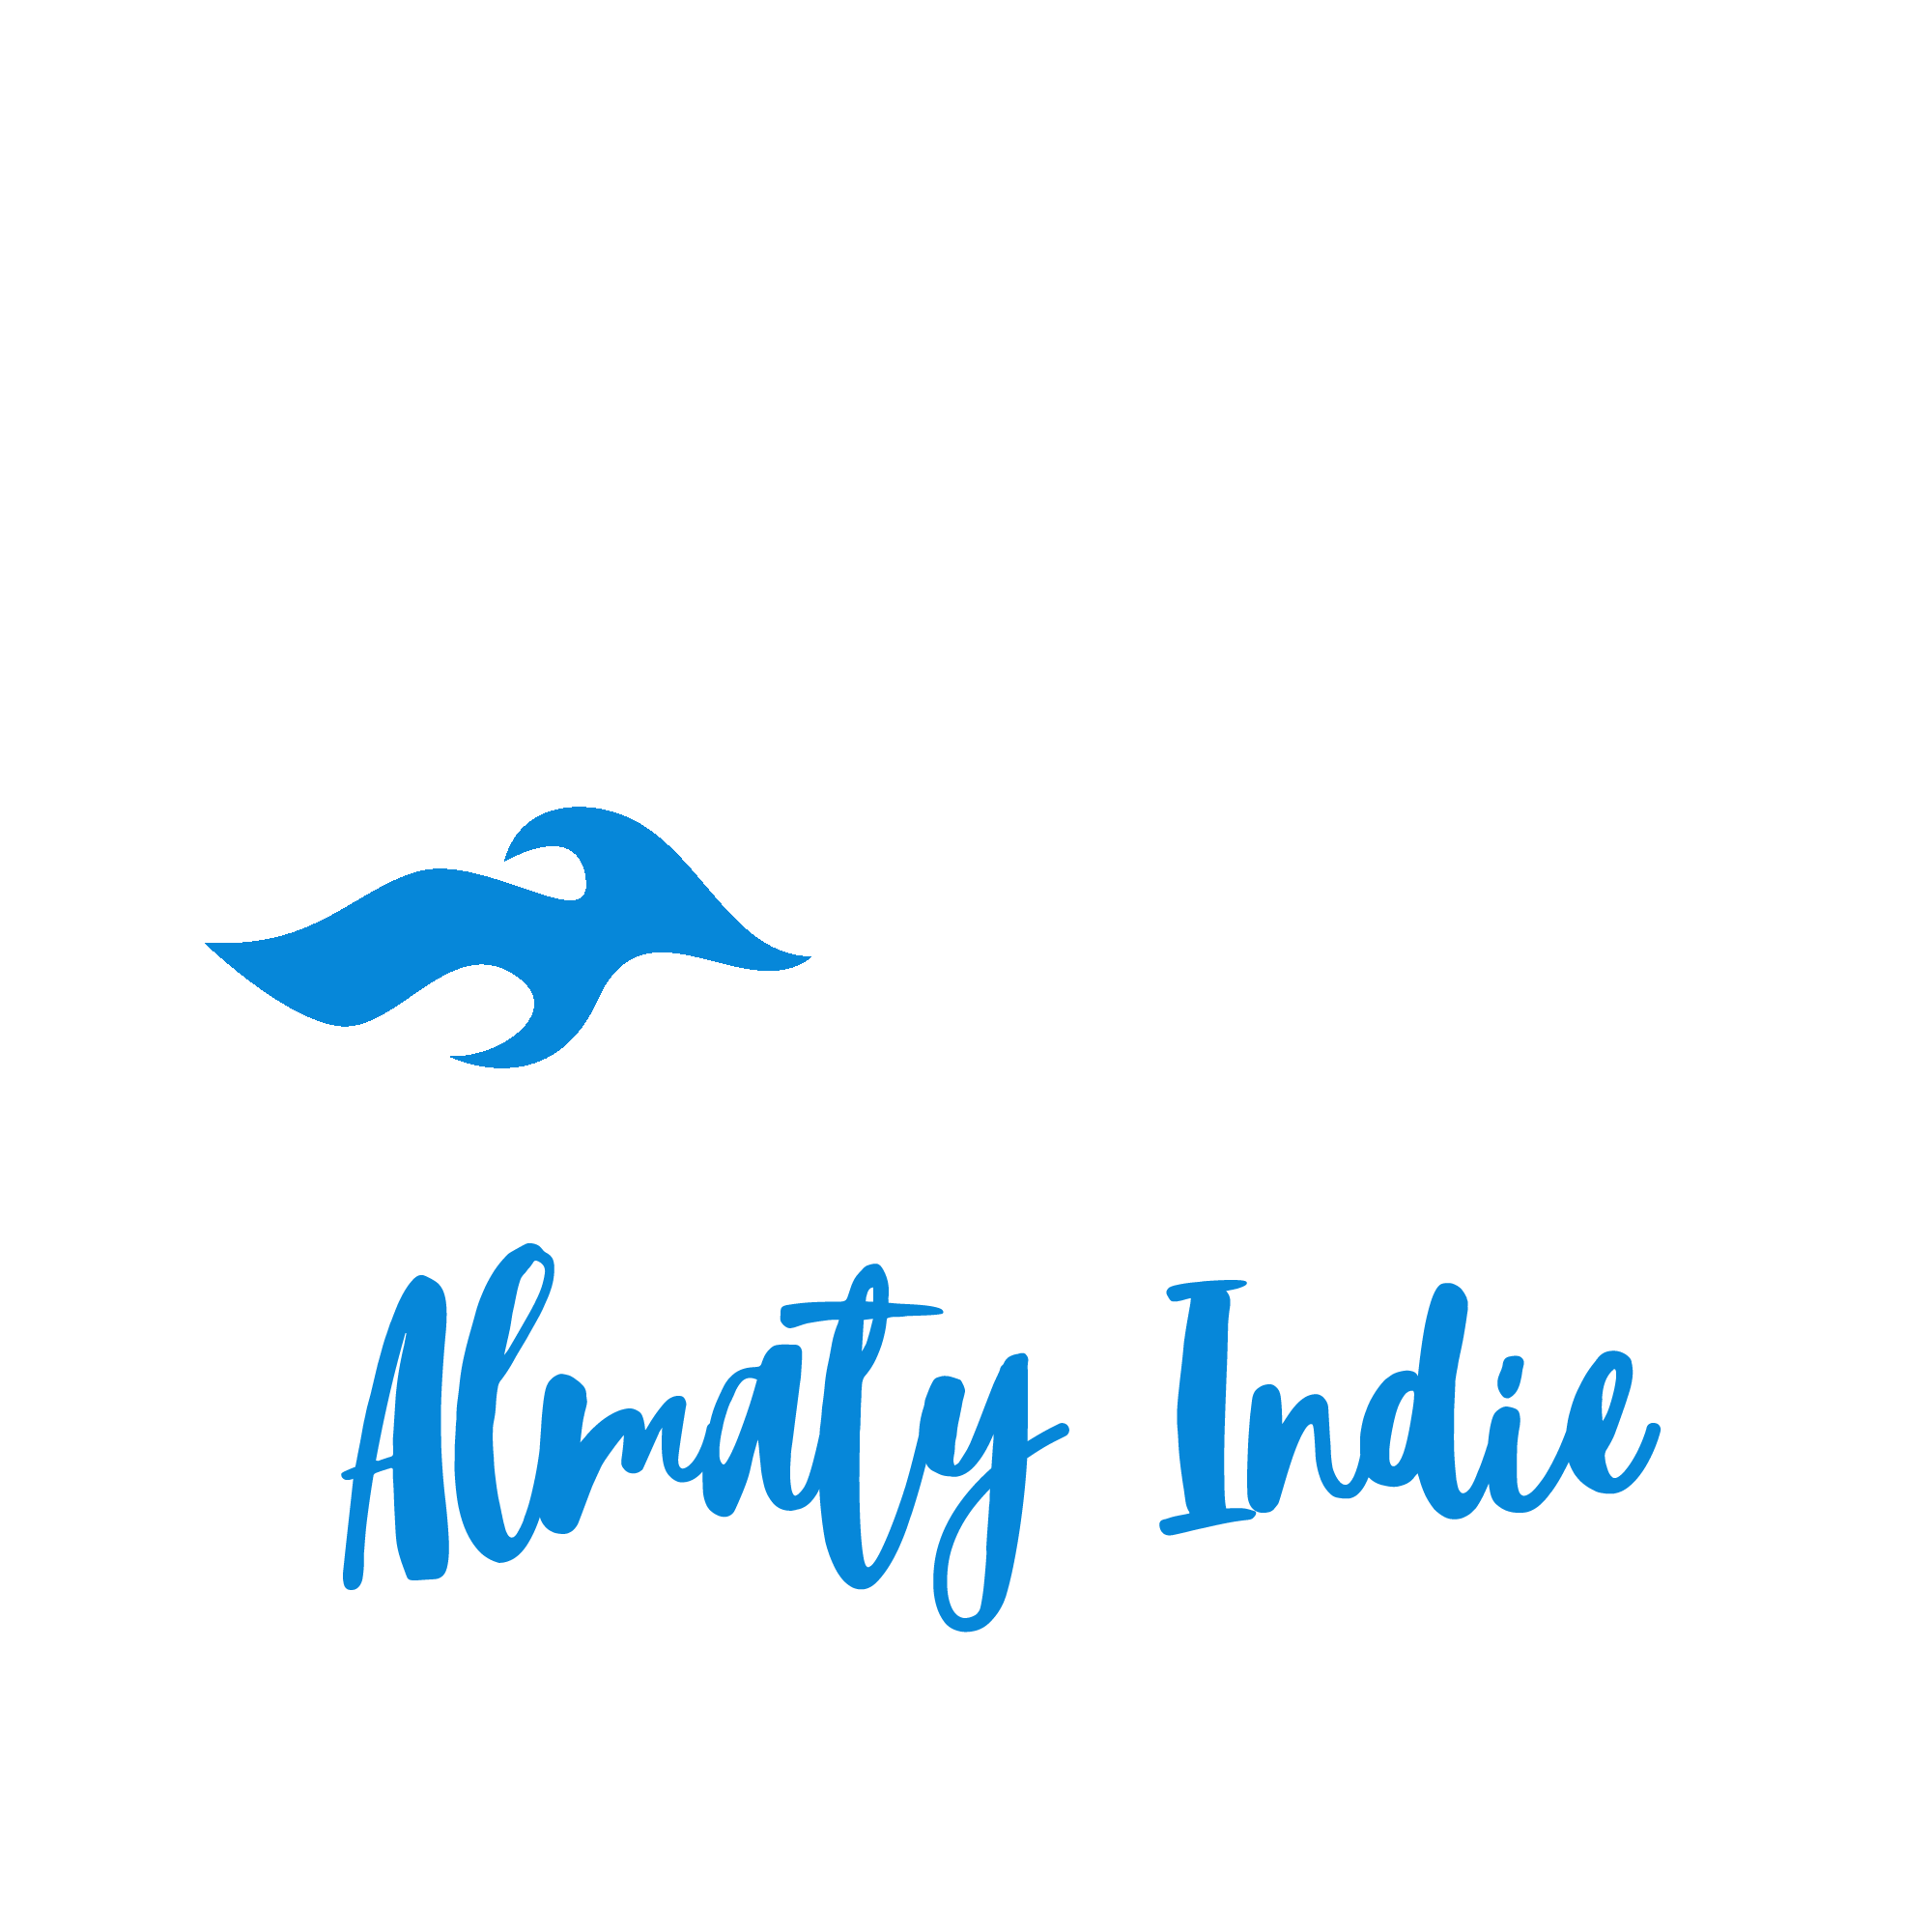 Almaty Indie Film Fest is a new and inspired international film festival breaking ground in Almaty, the heart of filmmaking in Kazakhstan.